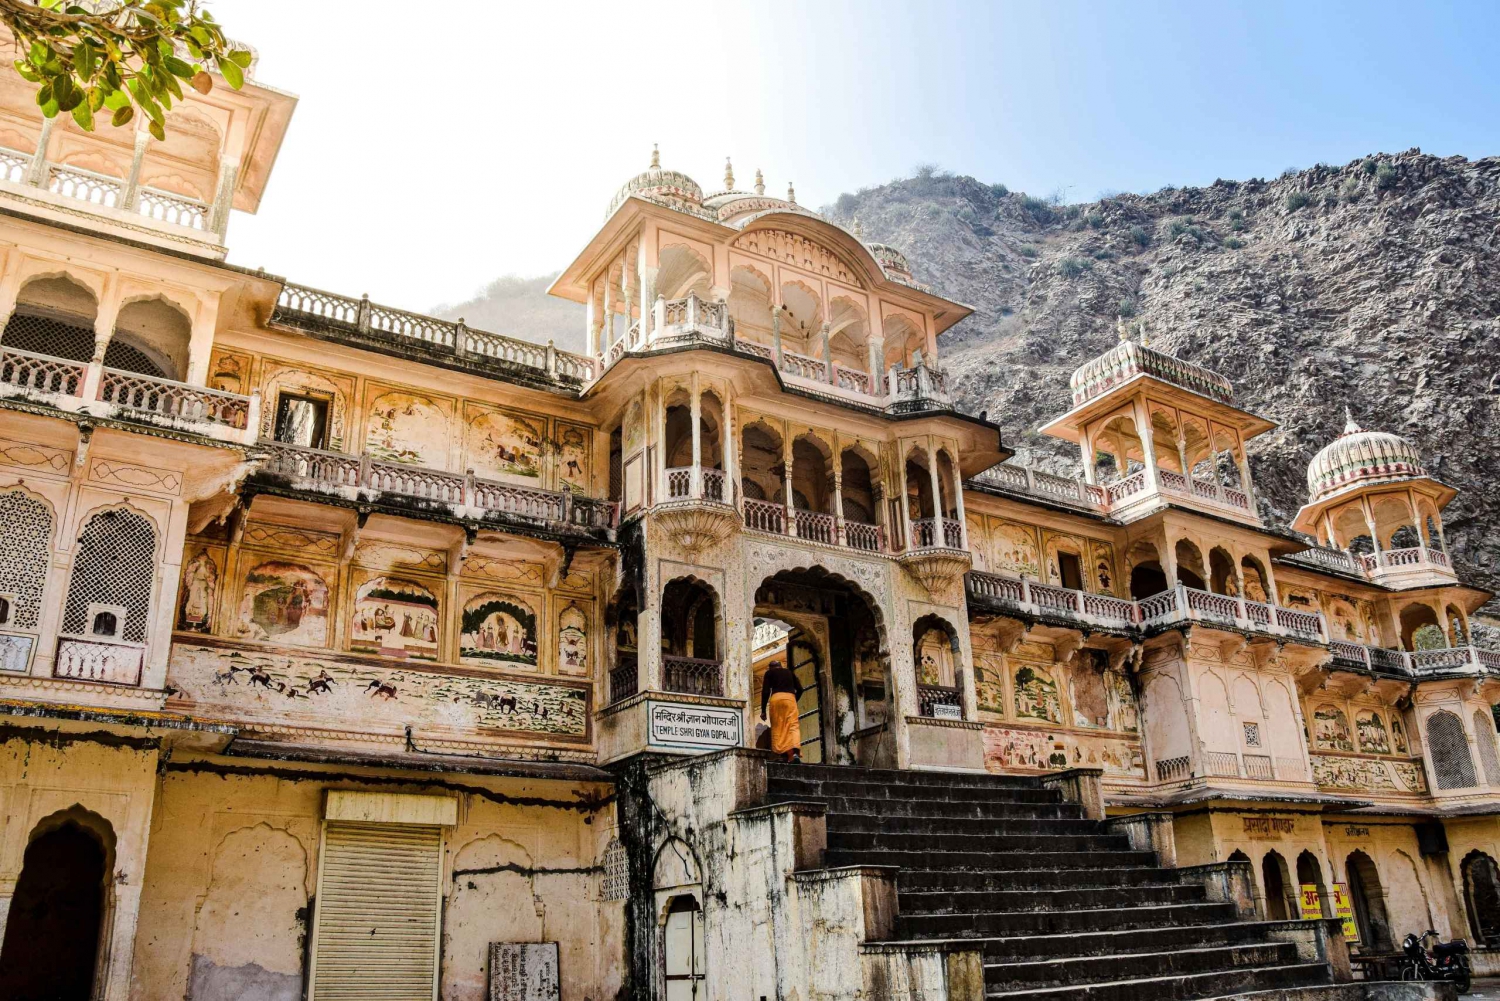 Jaipur: Amber Fort, Jal Mahal i Stepwell - wycieczka prywatna